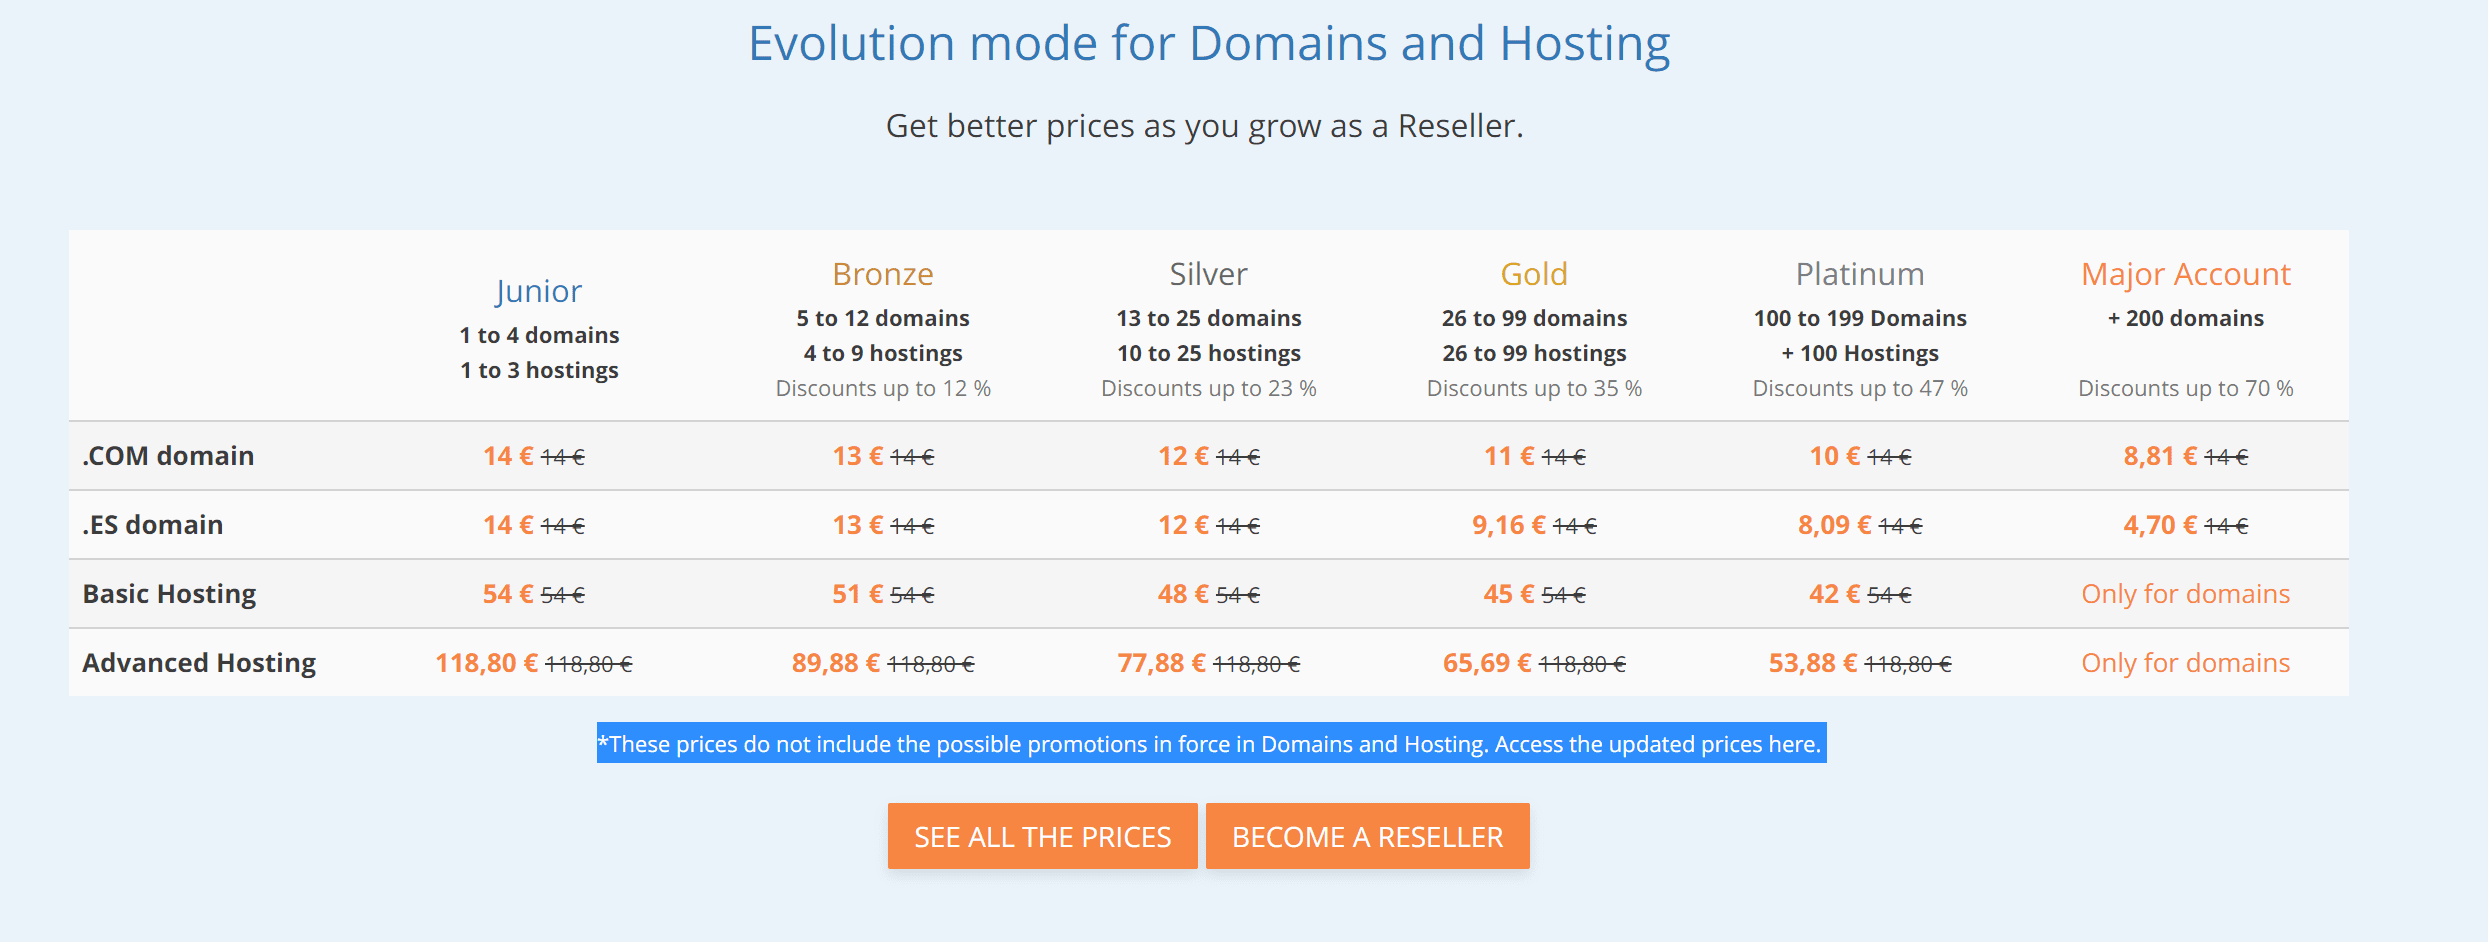 Evolution mode for Domains and Hosting